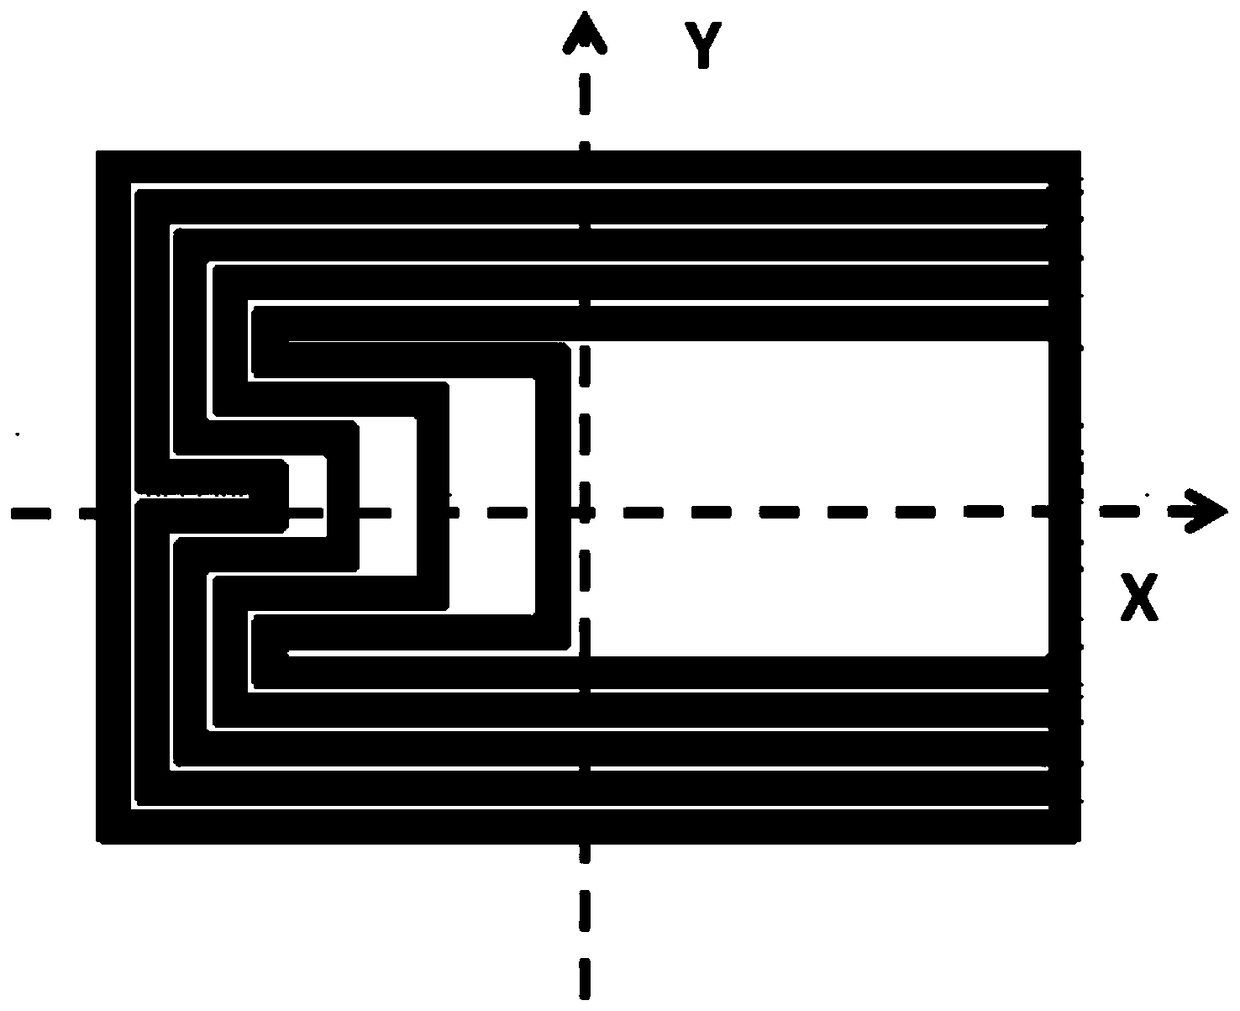 Circuit arrangement method